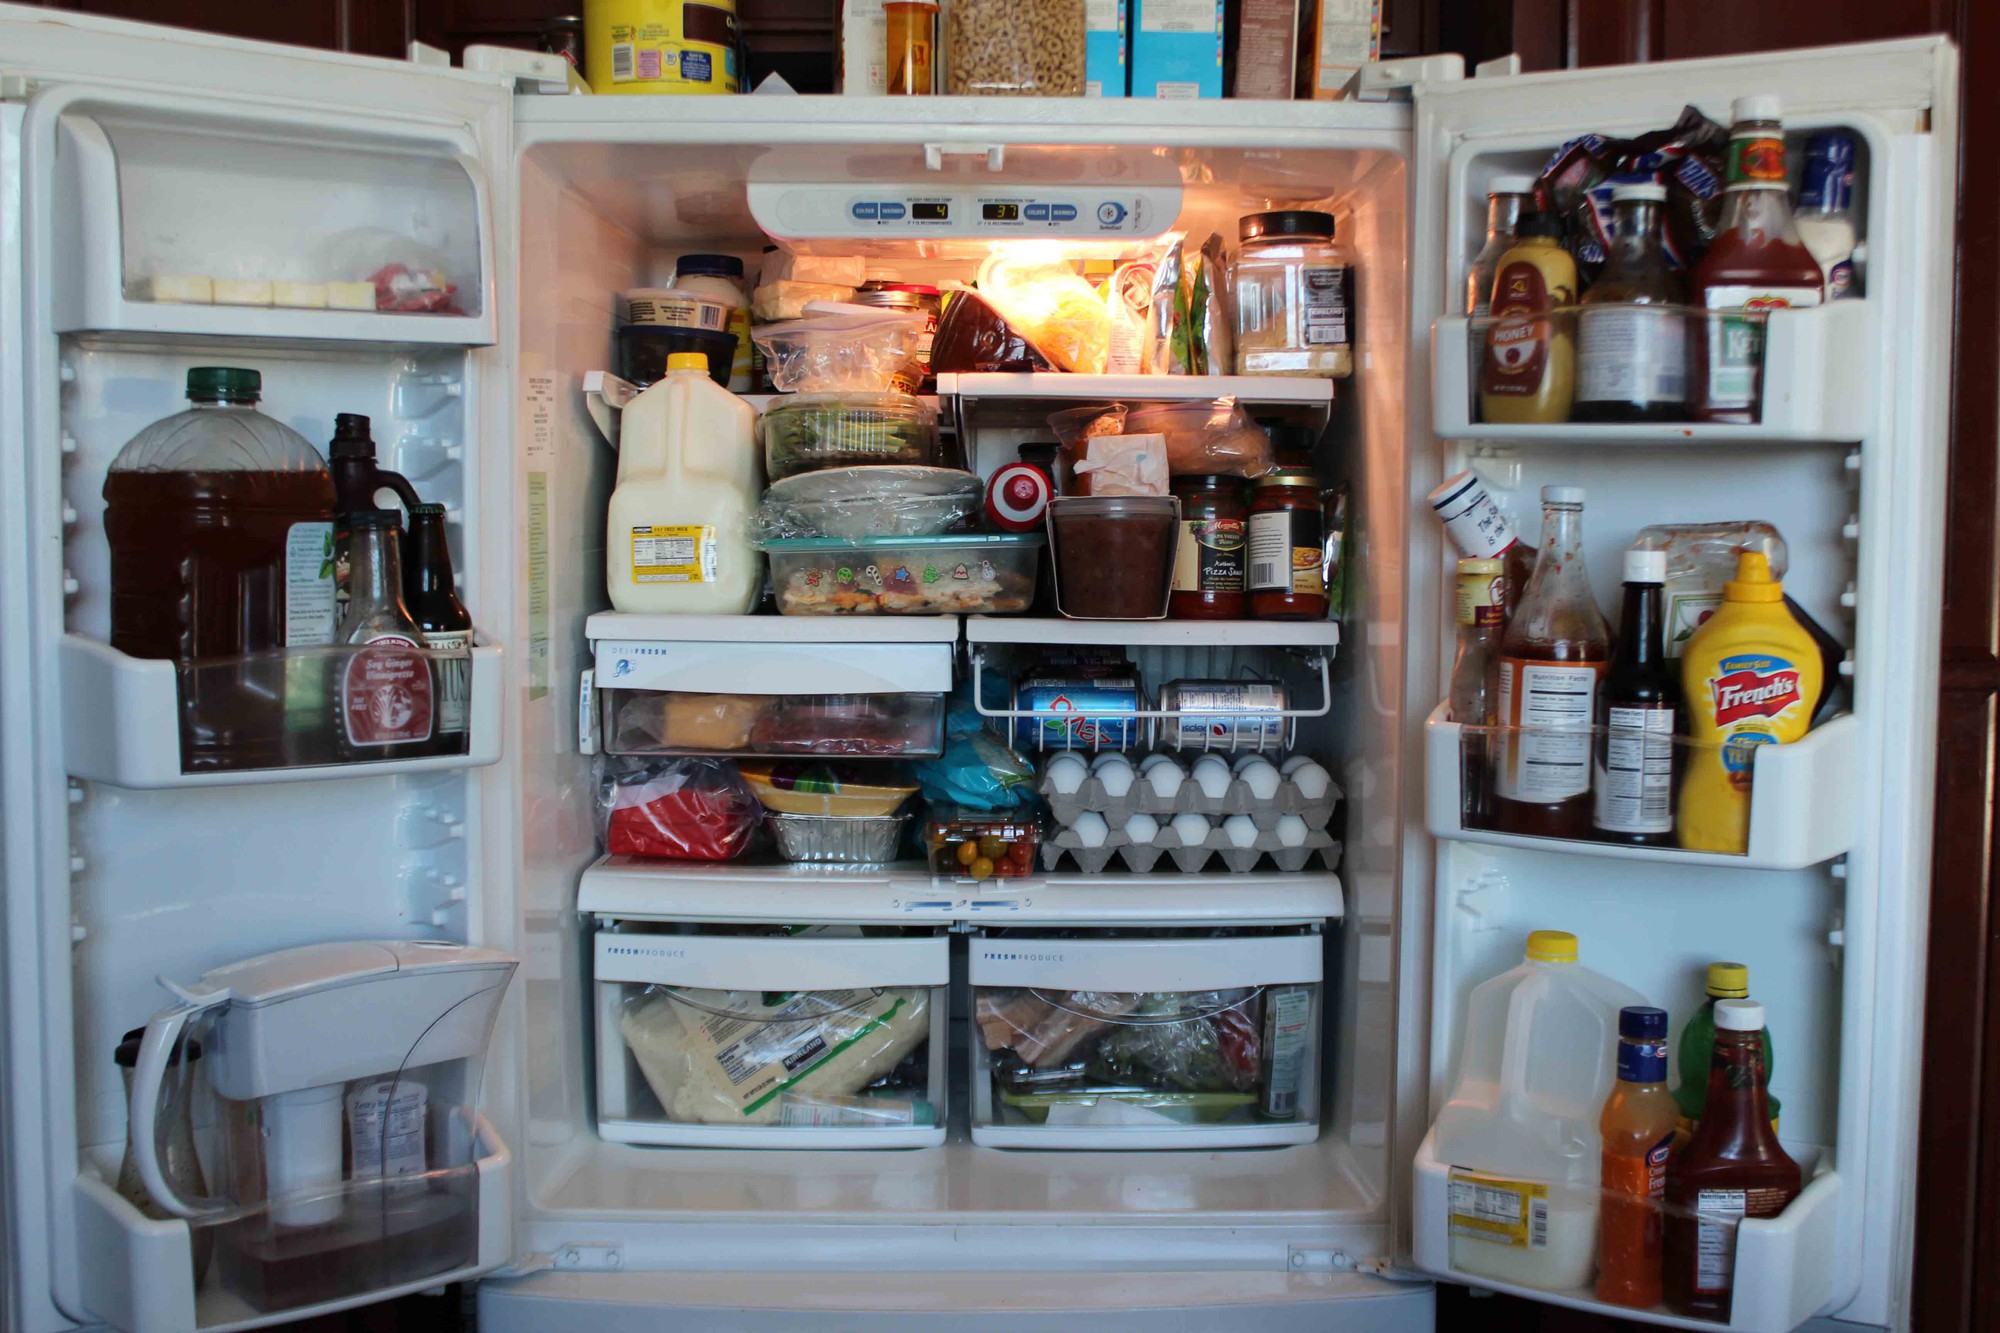 Refrigerator, Fridge, Refrigerator myths, Fridge temperature, Things never place in refrigerators, Bread, Tomatoes, Eggplant, Honey, Peanut butter, Ketchup, Oranges, Health news, Offbeat news